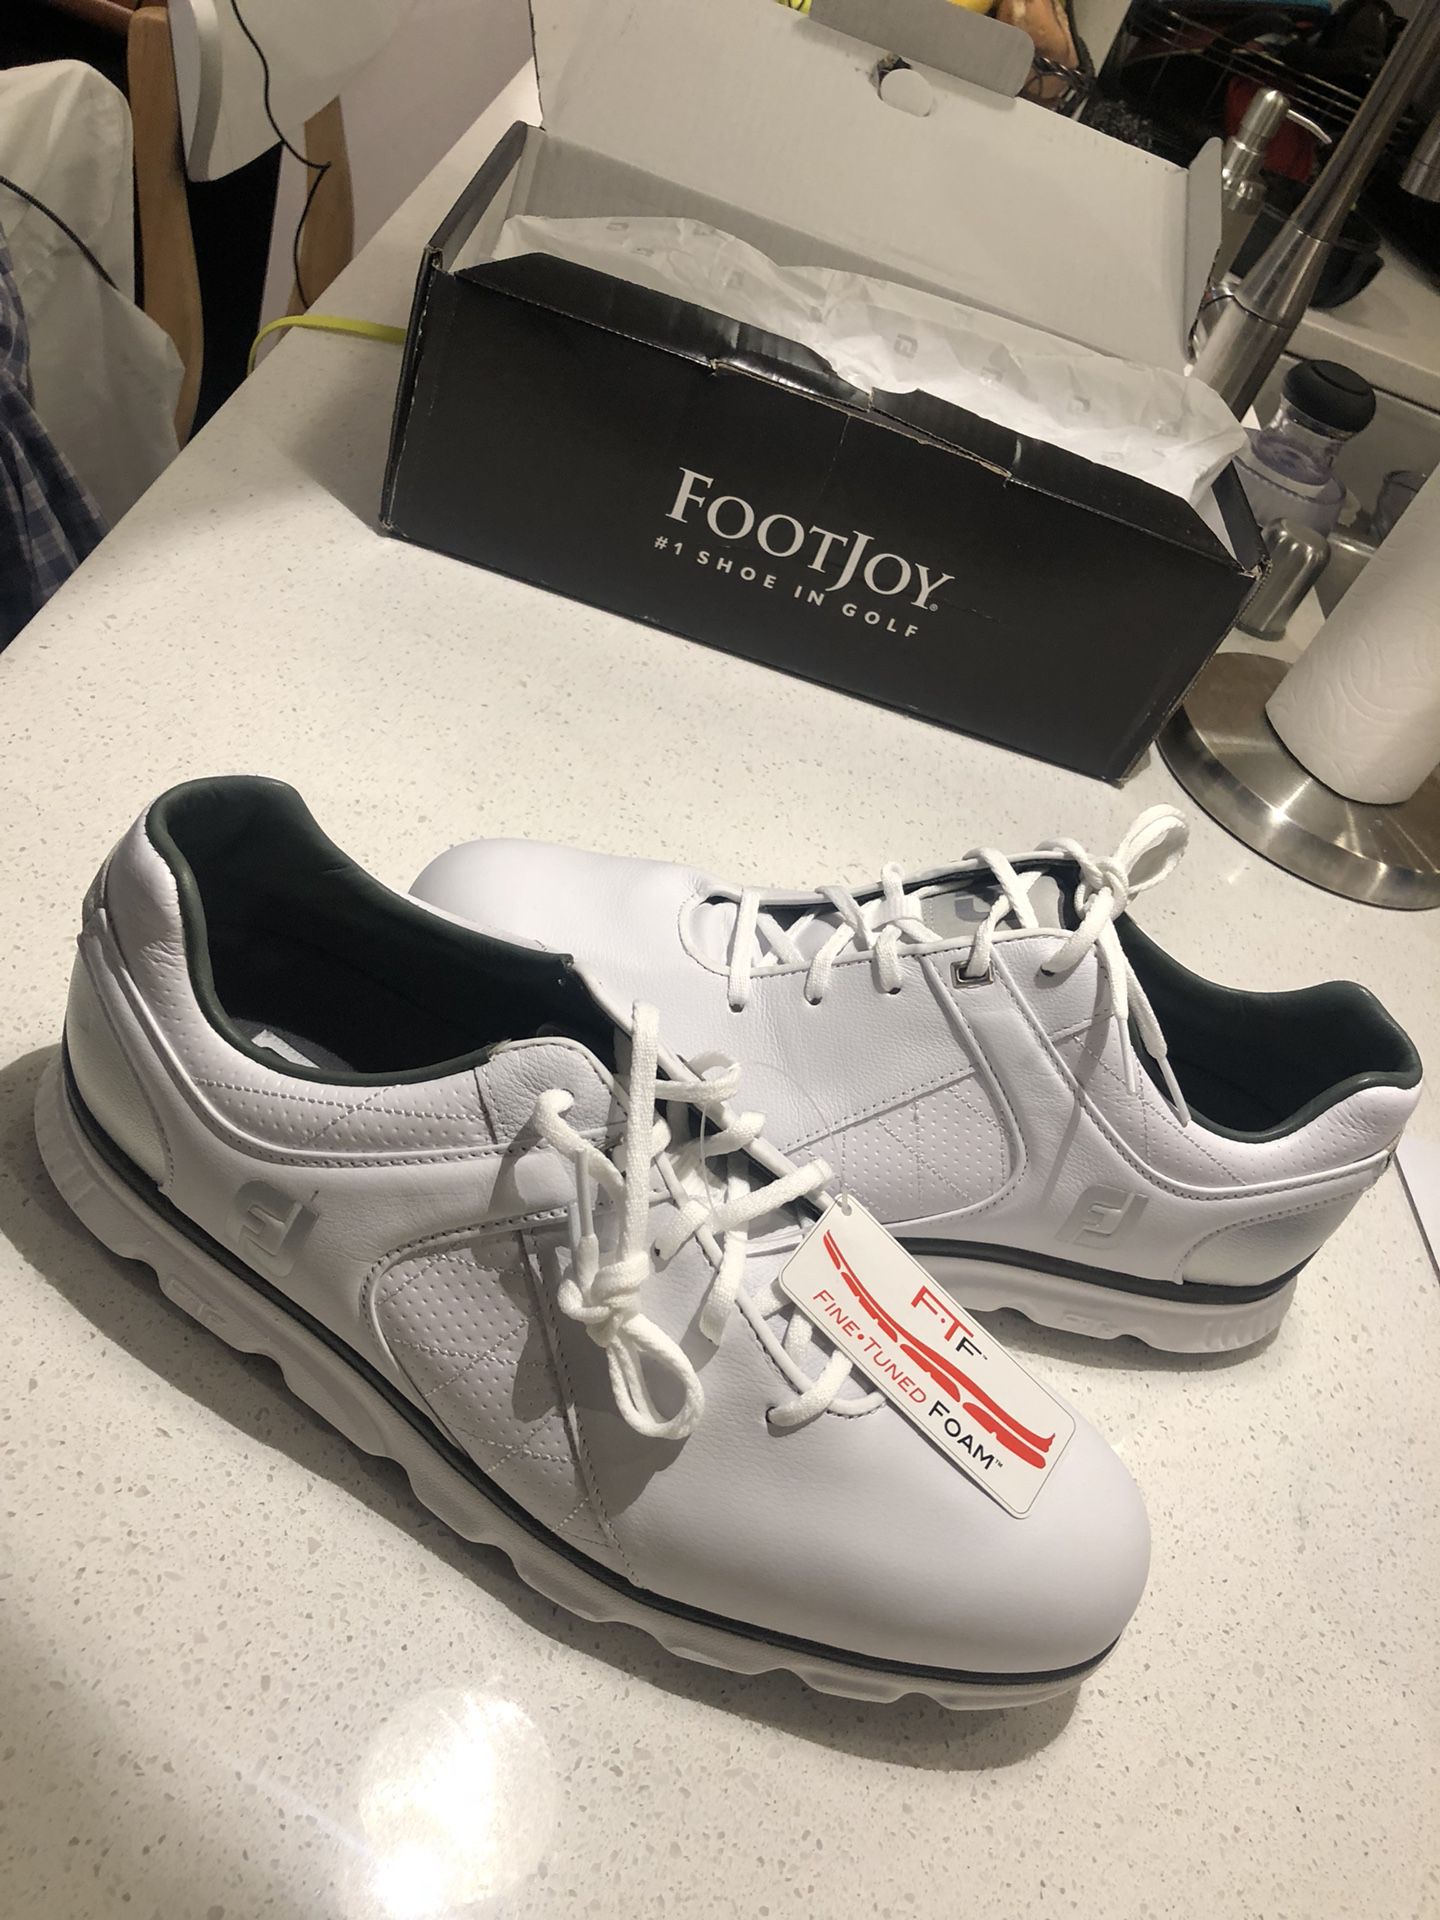 New Footjoy Pro SL golf shoes sz. 11 W